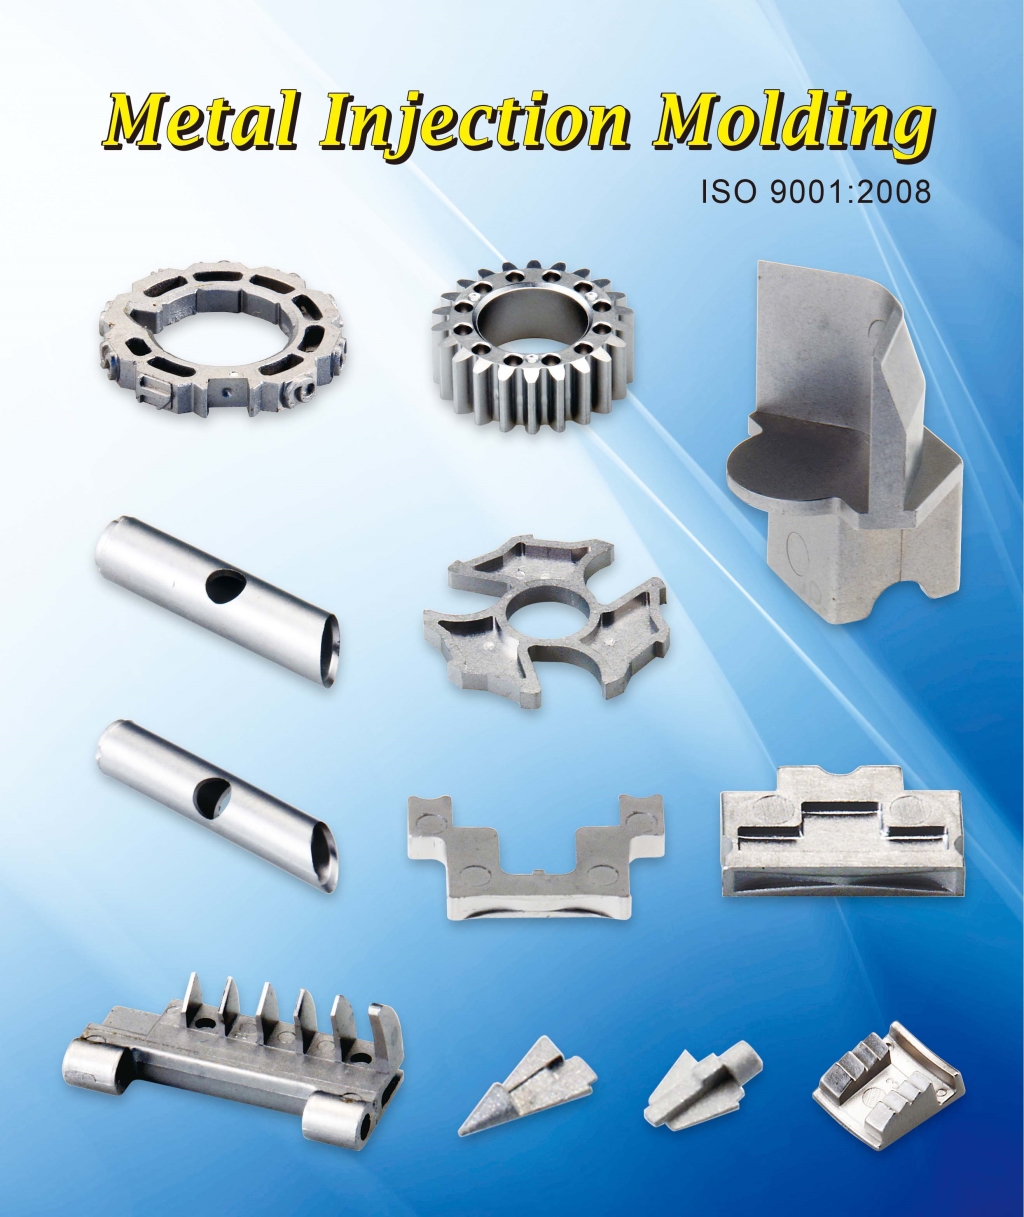 Survex MIM Metal Injection Molding